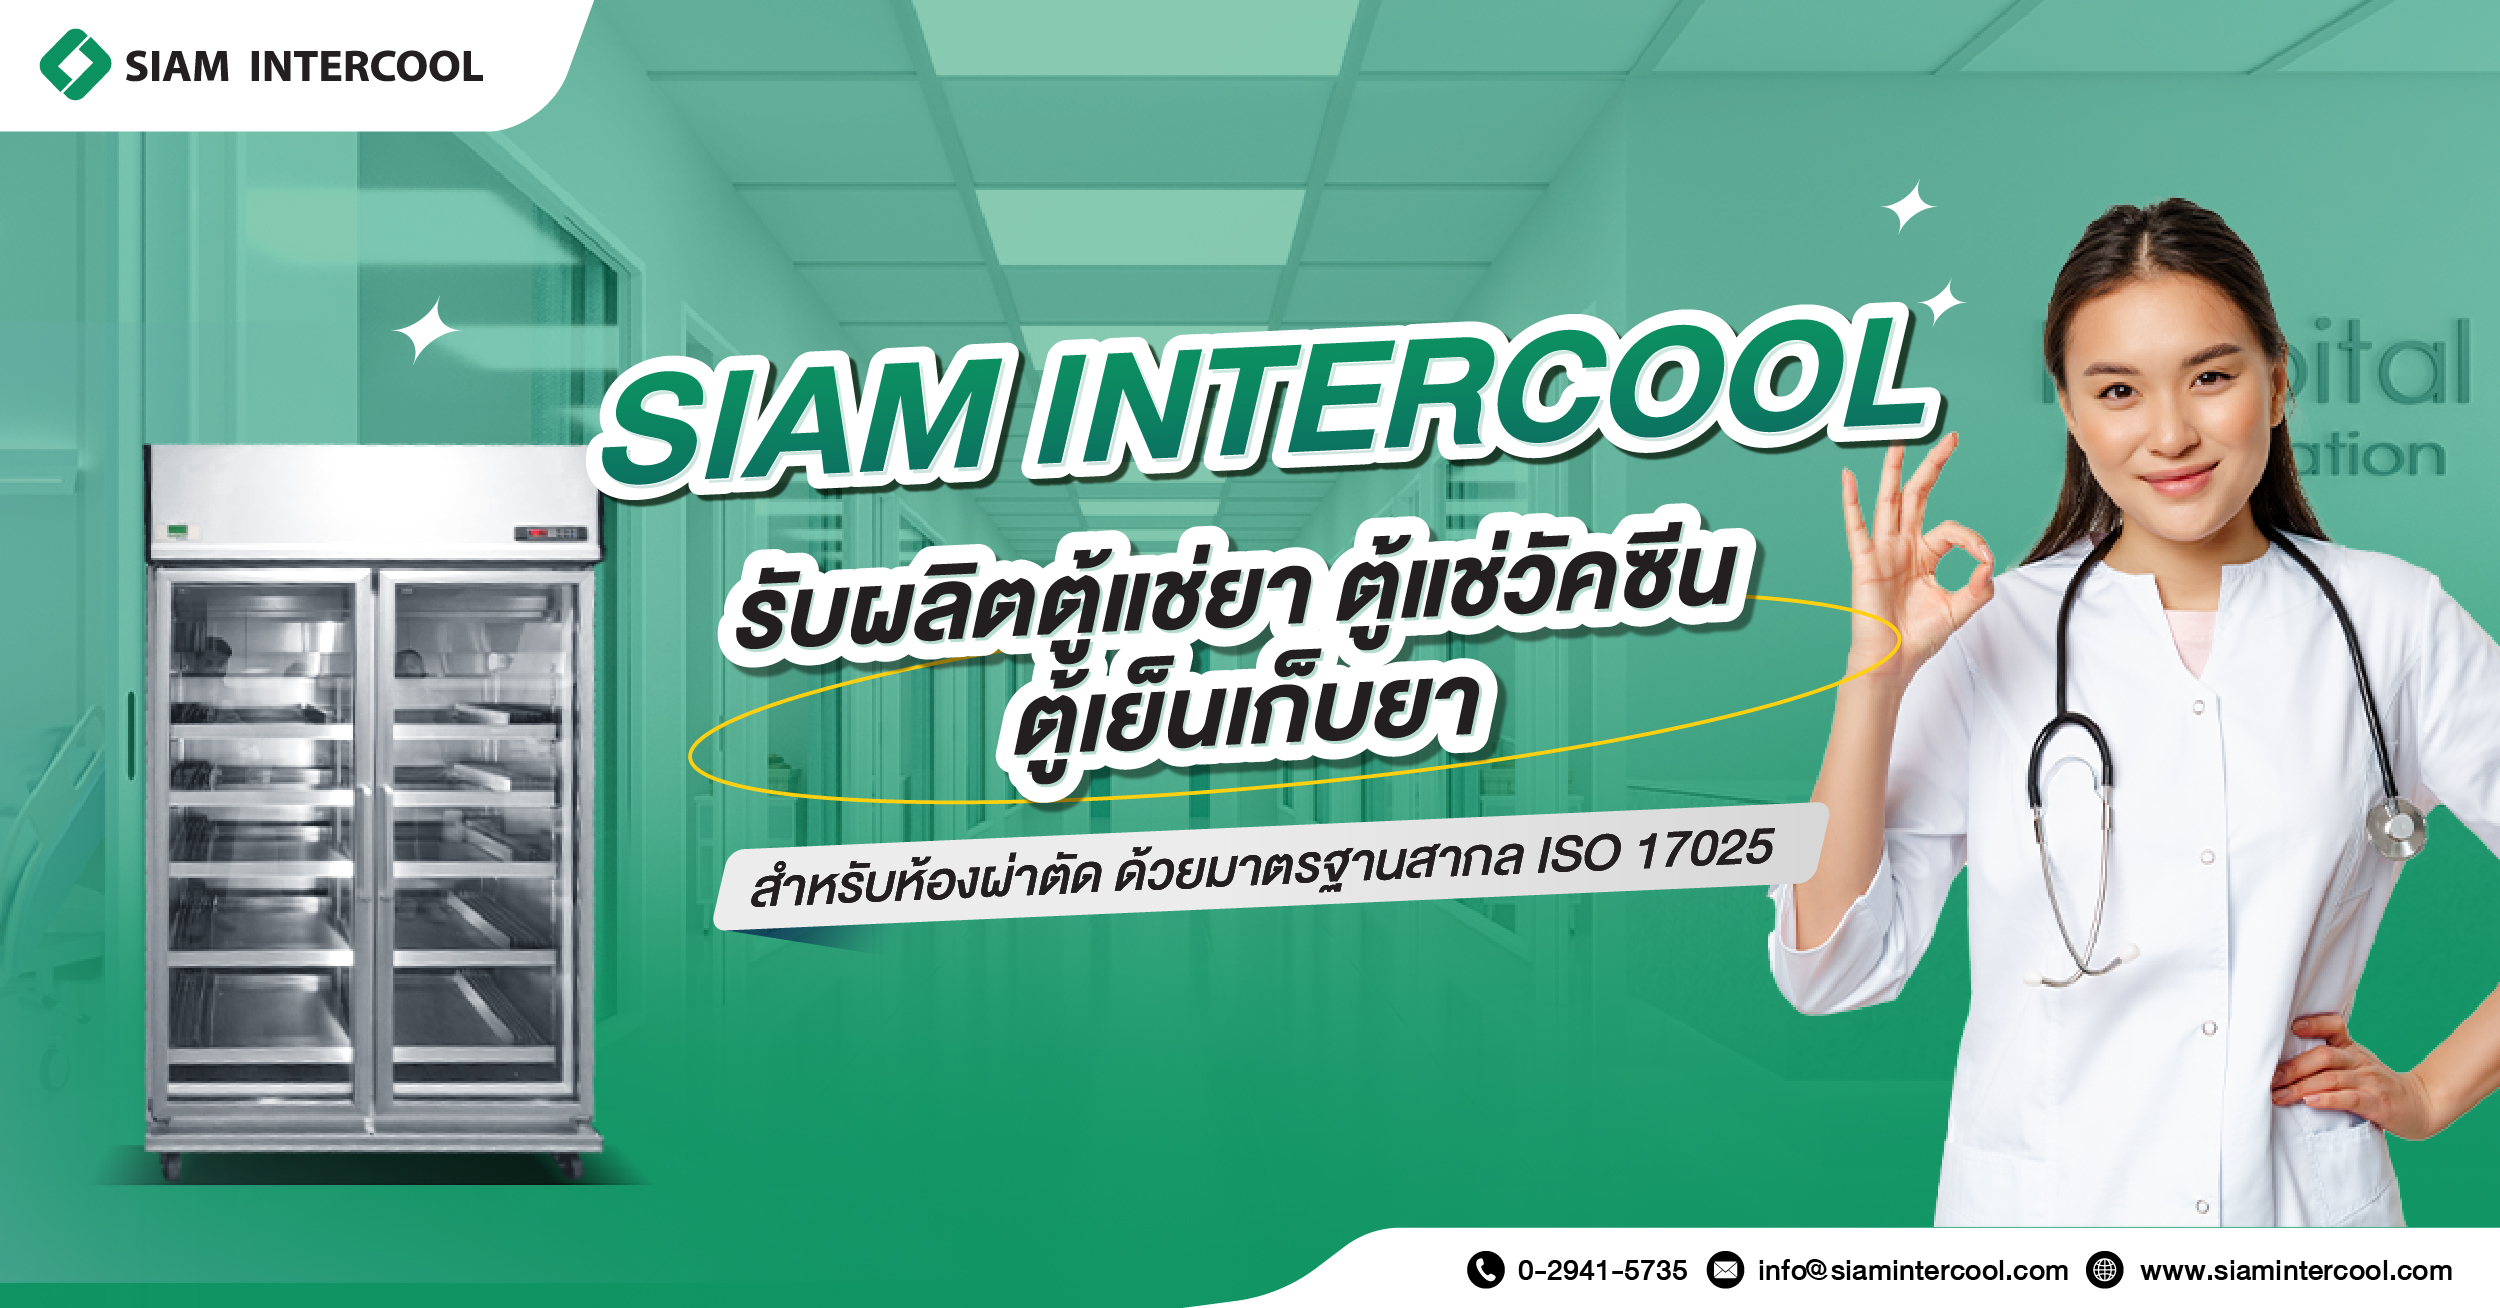 SIAM INTERCOOL รับผลิตตู้แช่ยา ตู้แช่วัคซีน ตู้เย็นเก็บยาสำหรับห้องผ่าตัด ด้วยมาตรฐานสากล ISO 17025